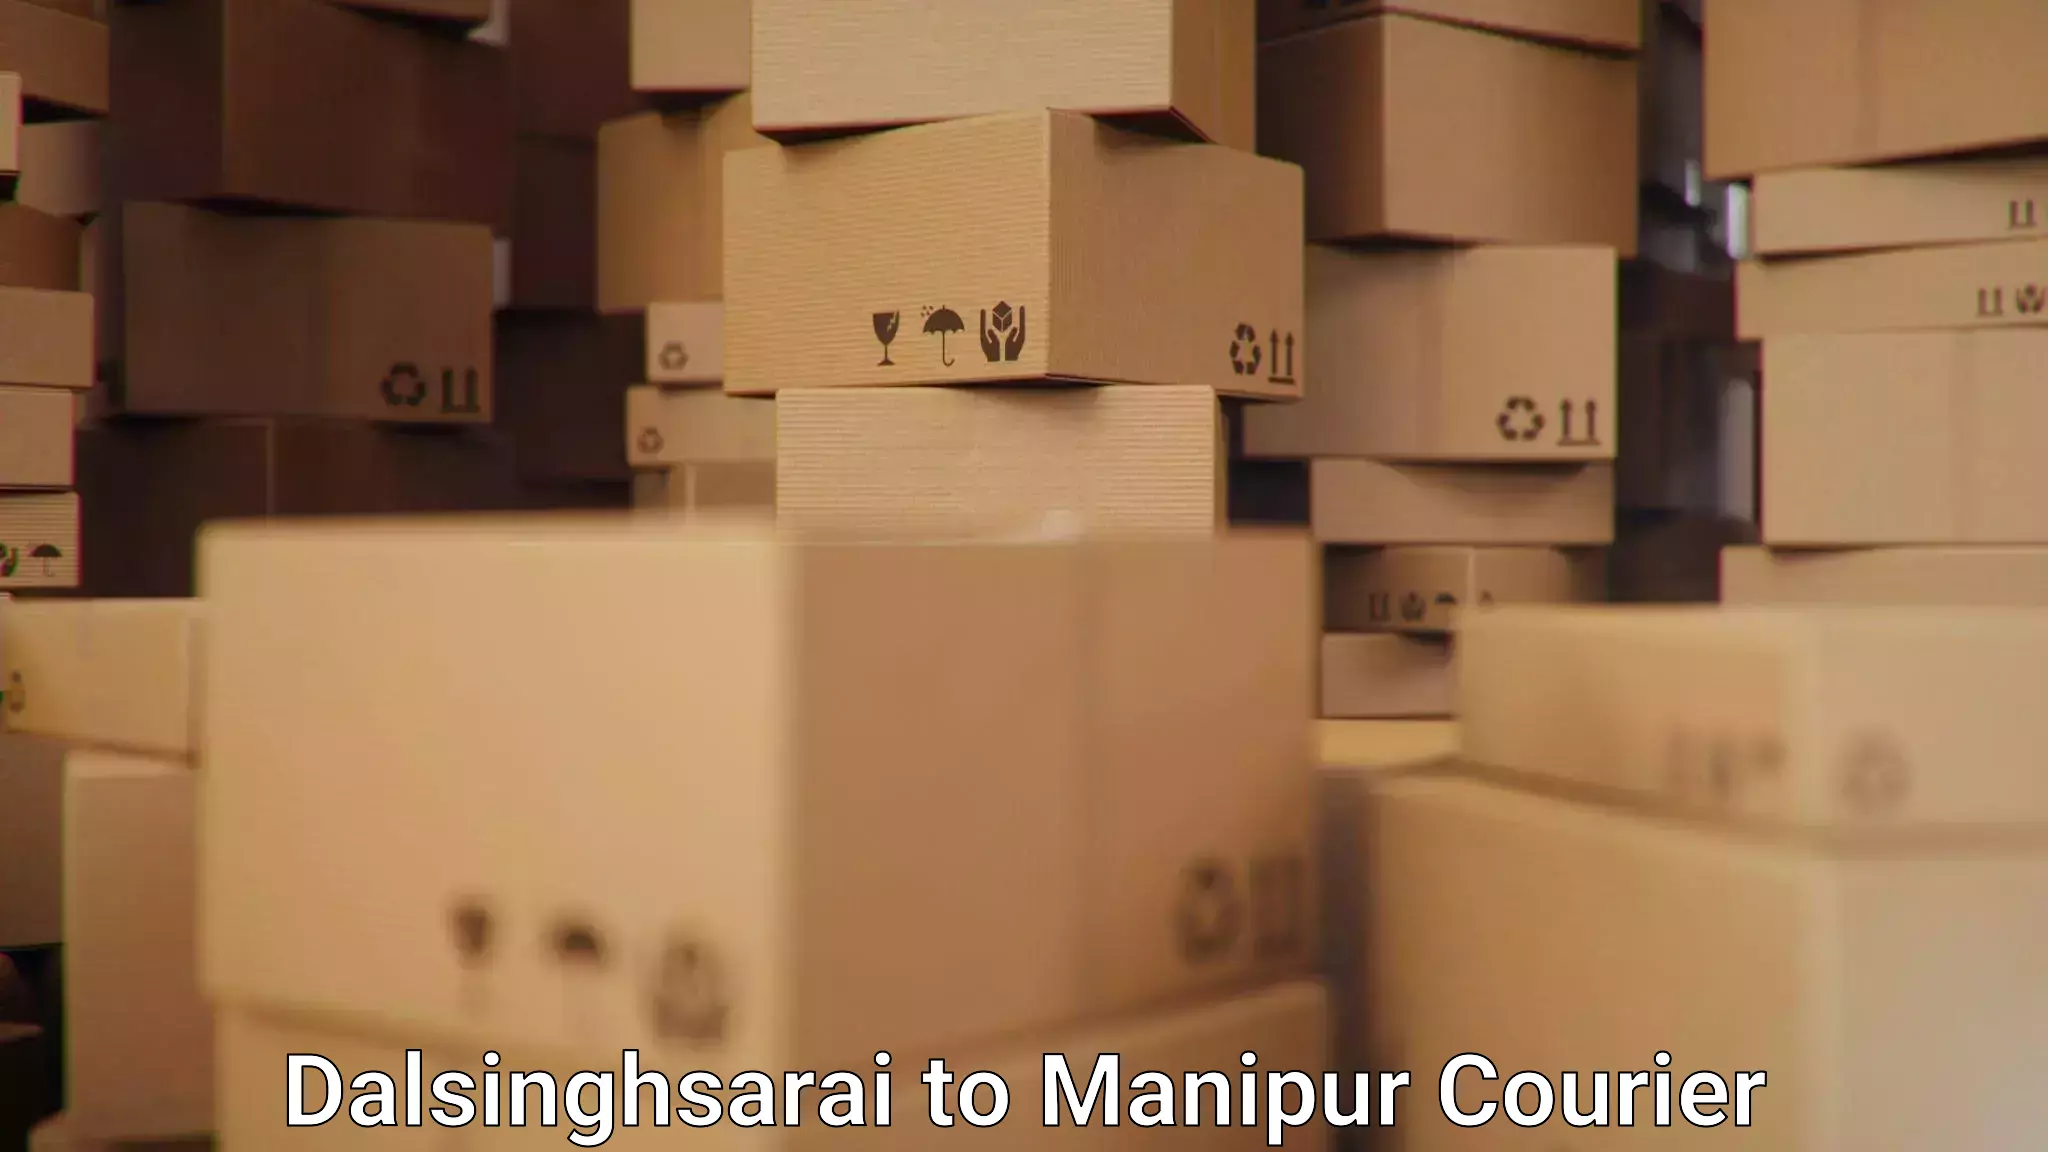 Smart logistics solutions Dalsinghsarai to Manipur